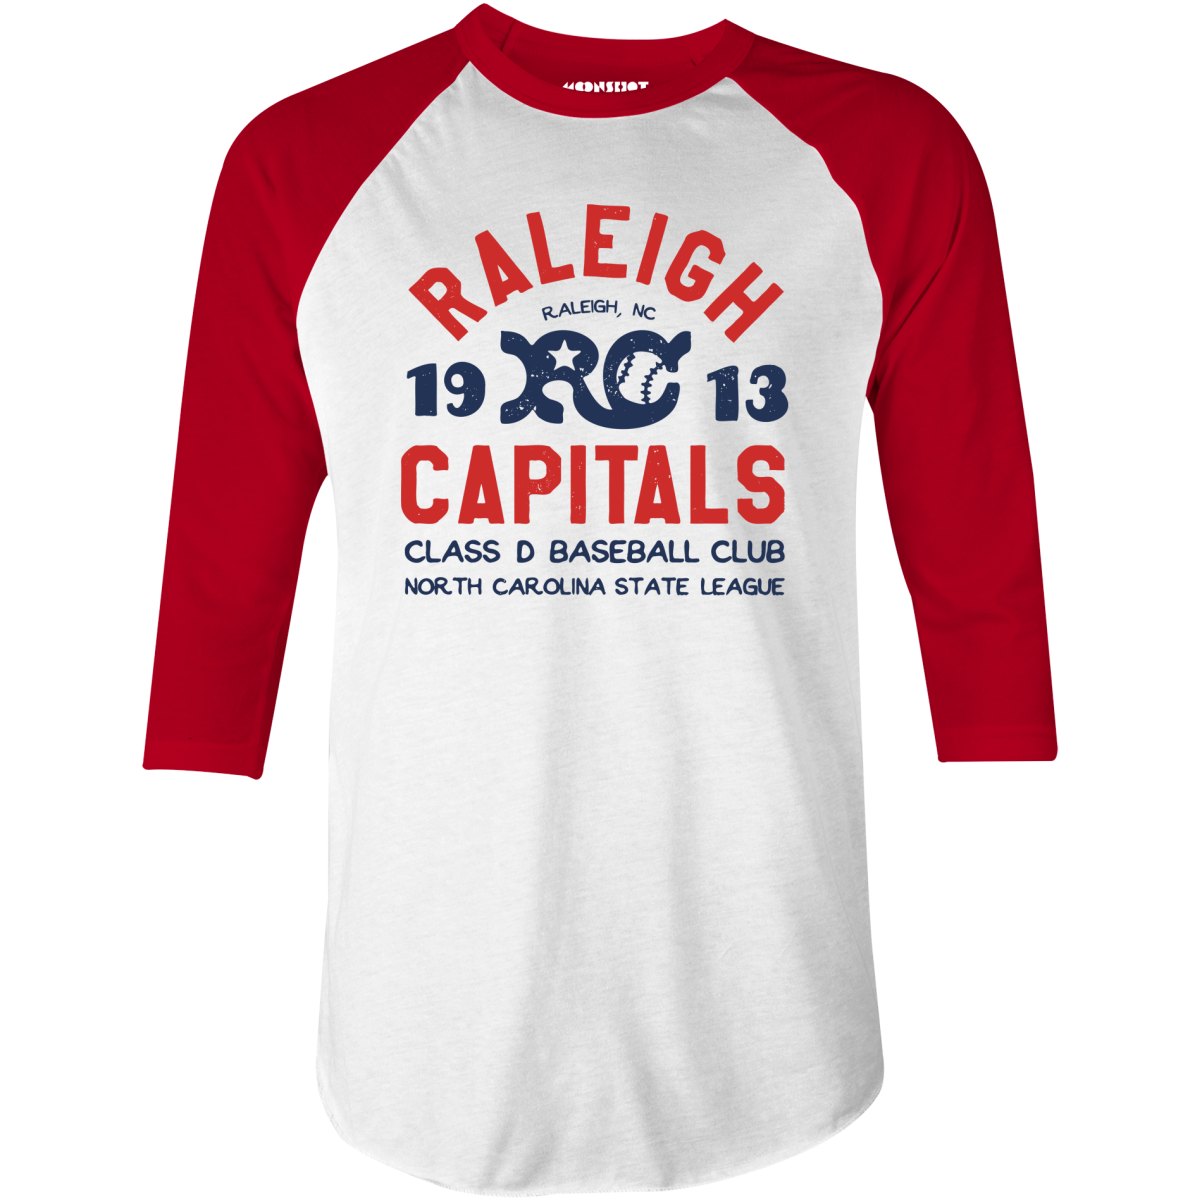 Raleigh Capitals - North Carolina - Vintage Defunct Baseball Teams - 3/4 Sleeve Raglan T-Shirt